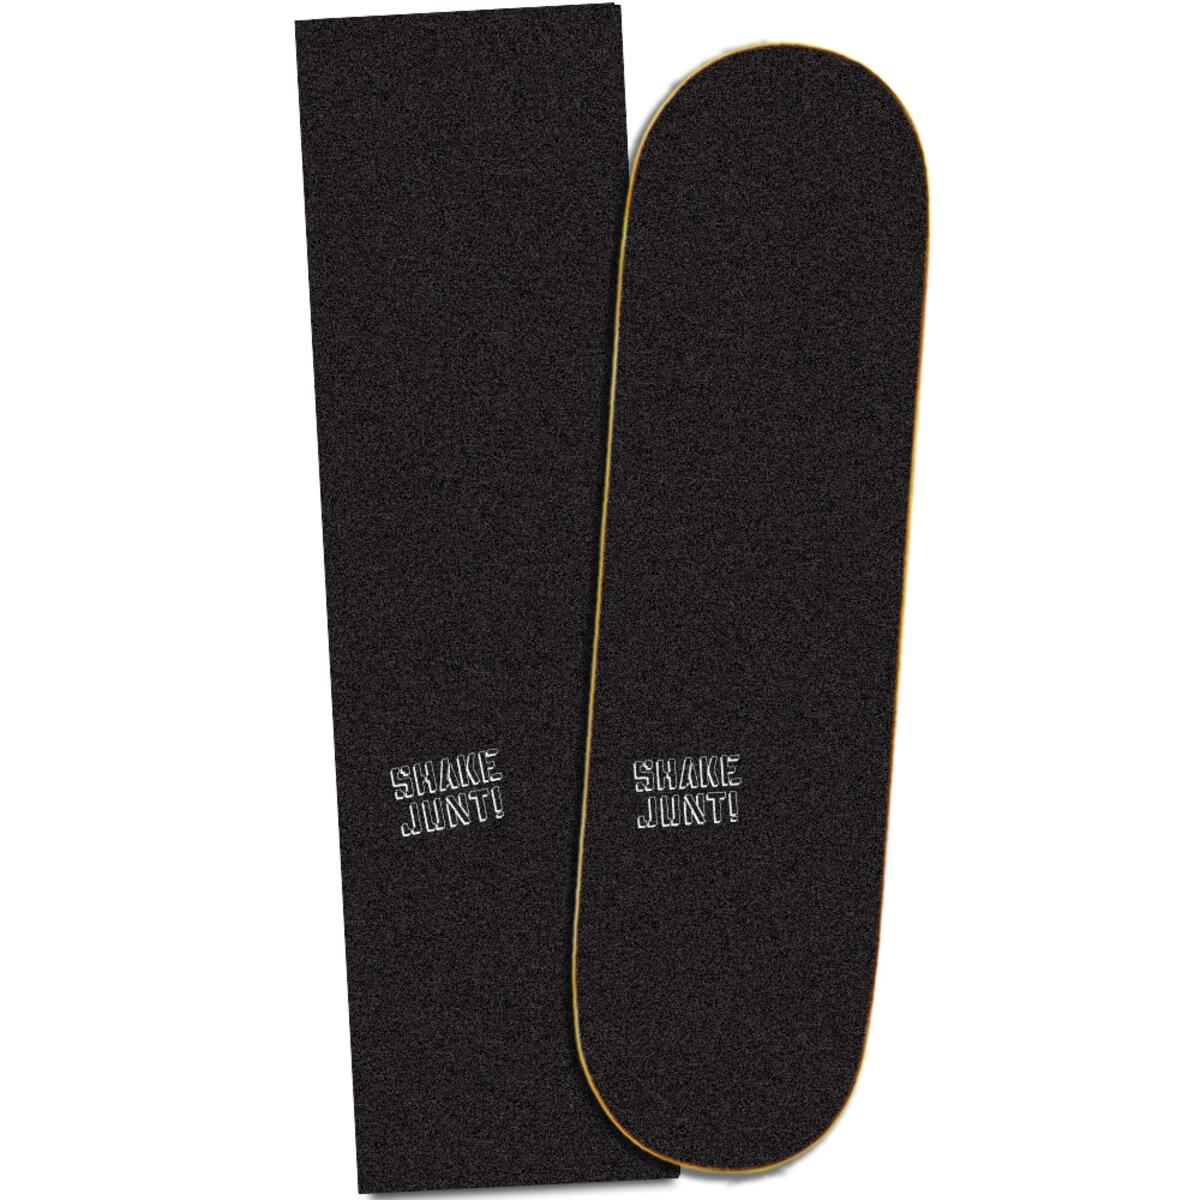 Skateboard Grip Tape Griptape at ChutingStar Skate Shop